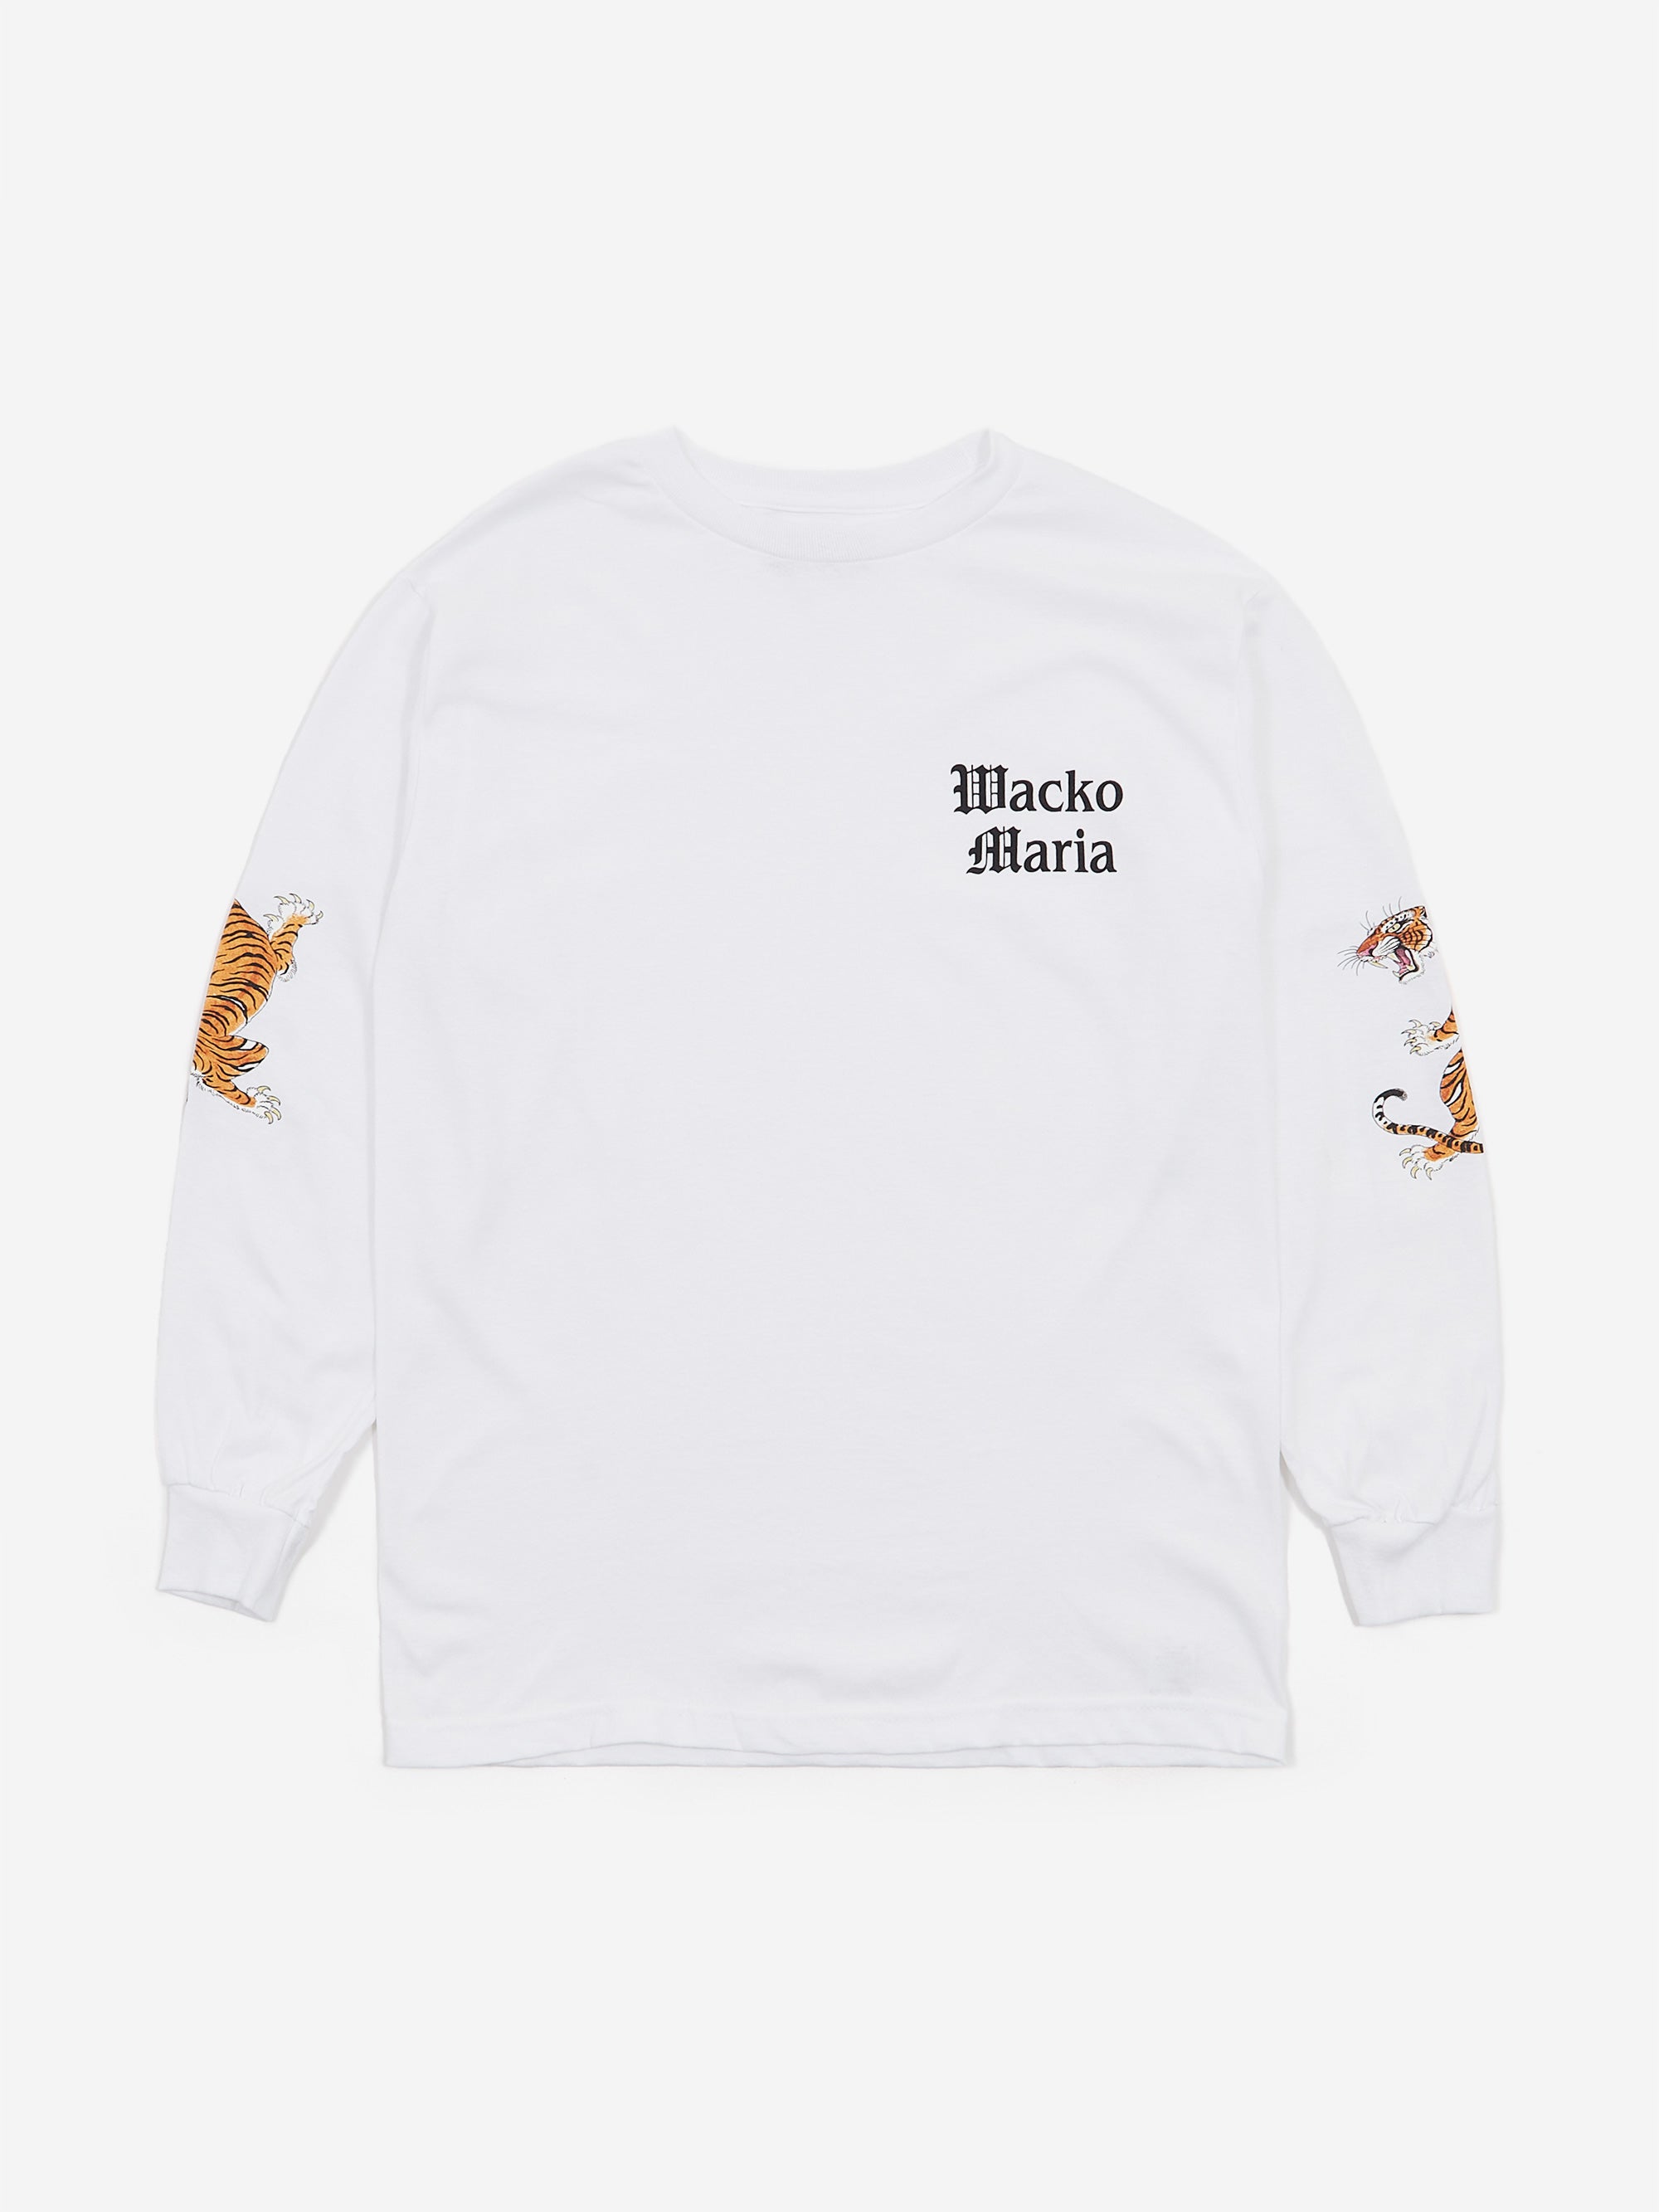 Wacko Maria Tim Lehi / Crew Neck Long Sleeve T-Shirt (Type-1) - White